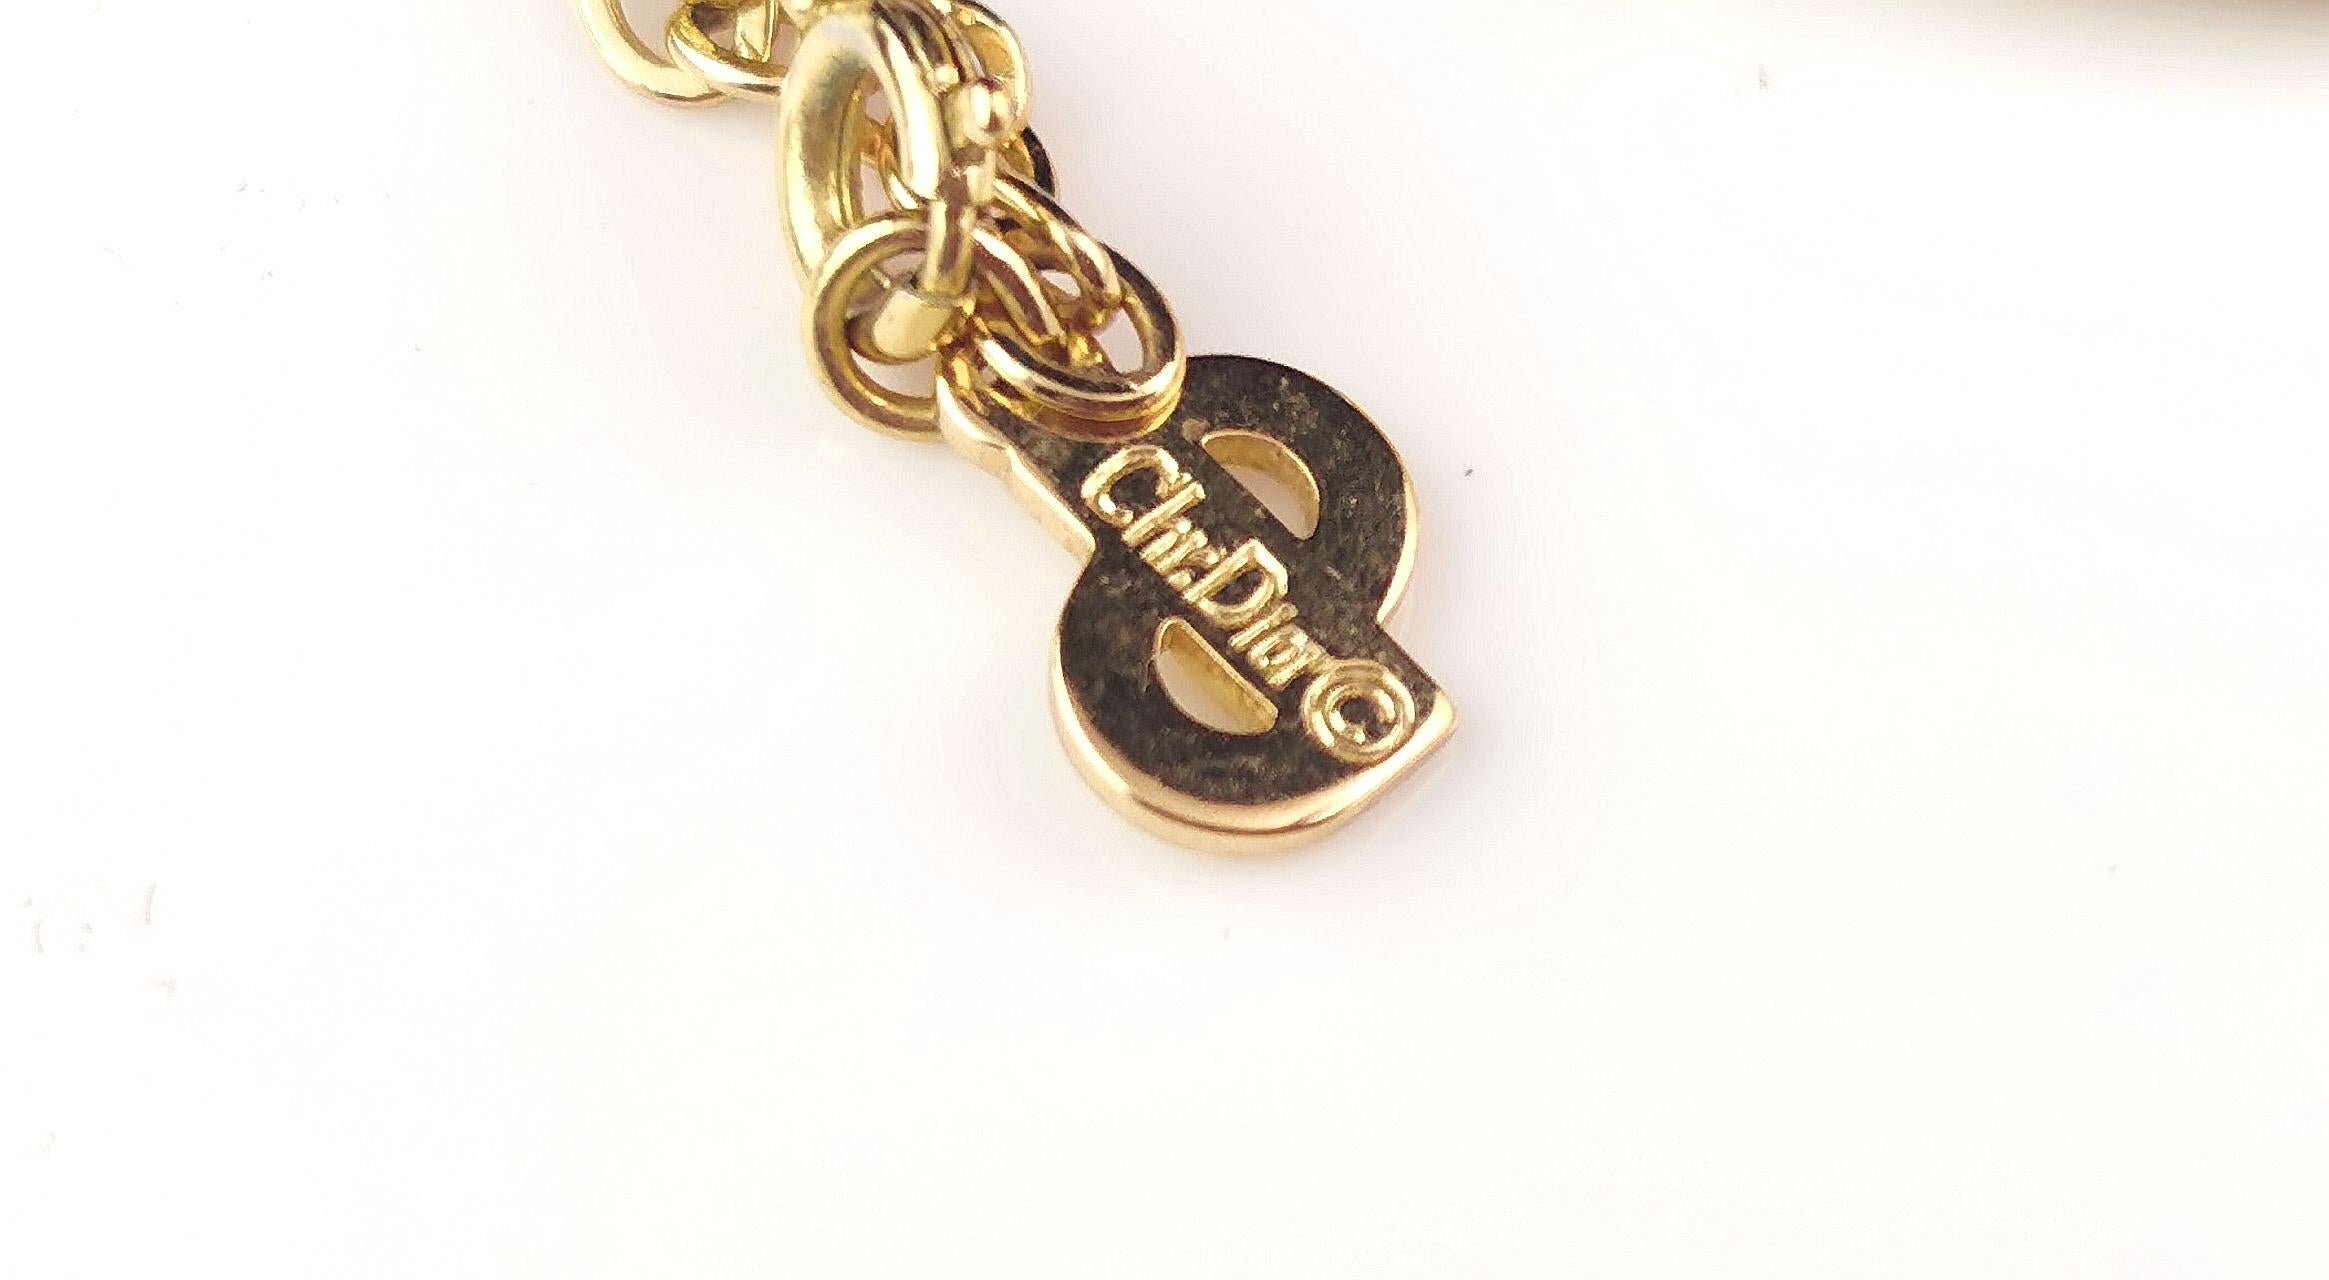  Vintage Christian Dior gold tone diamante logo pendant necklace  For Sale 3